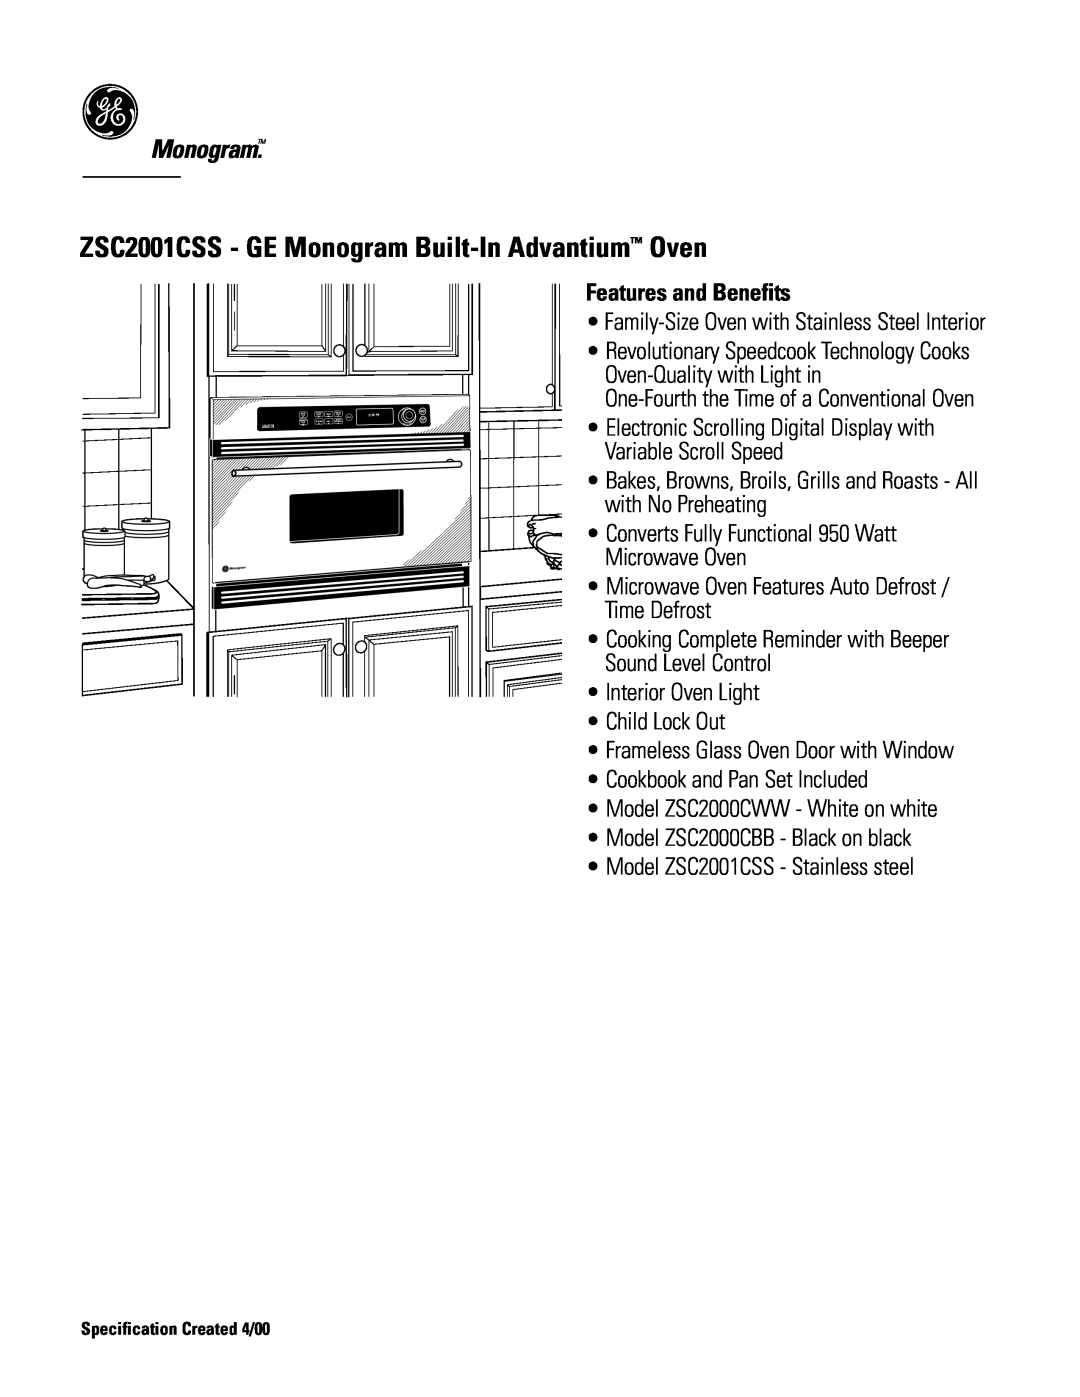 GE Monogram dimensions ZSC2001CSS - GE Monogram Built-In Advantium Oven, Features and Benefits 